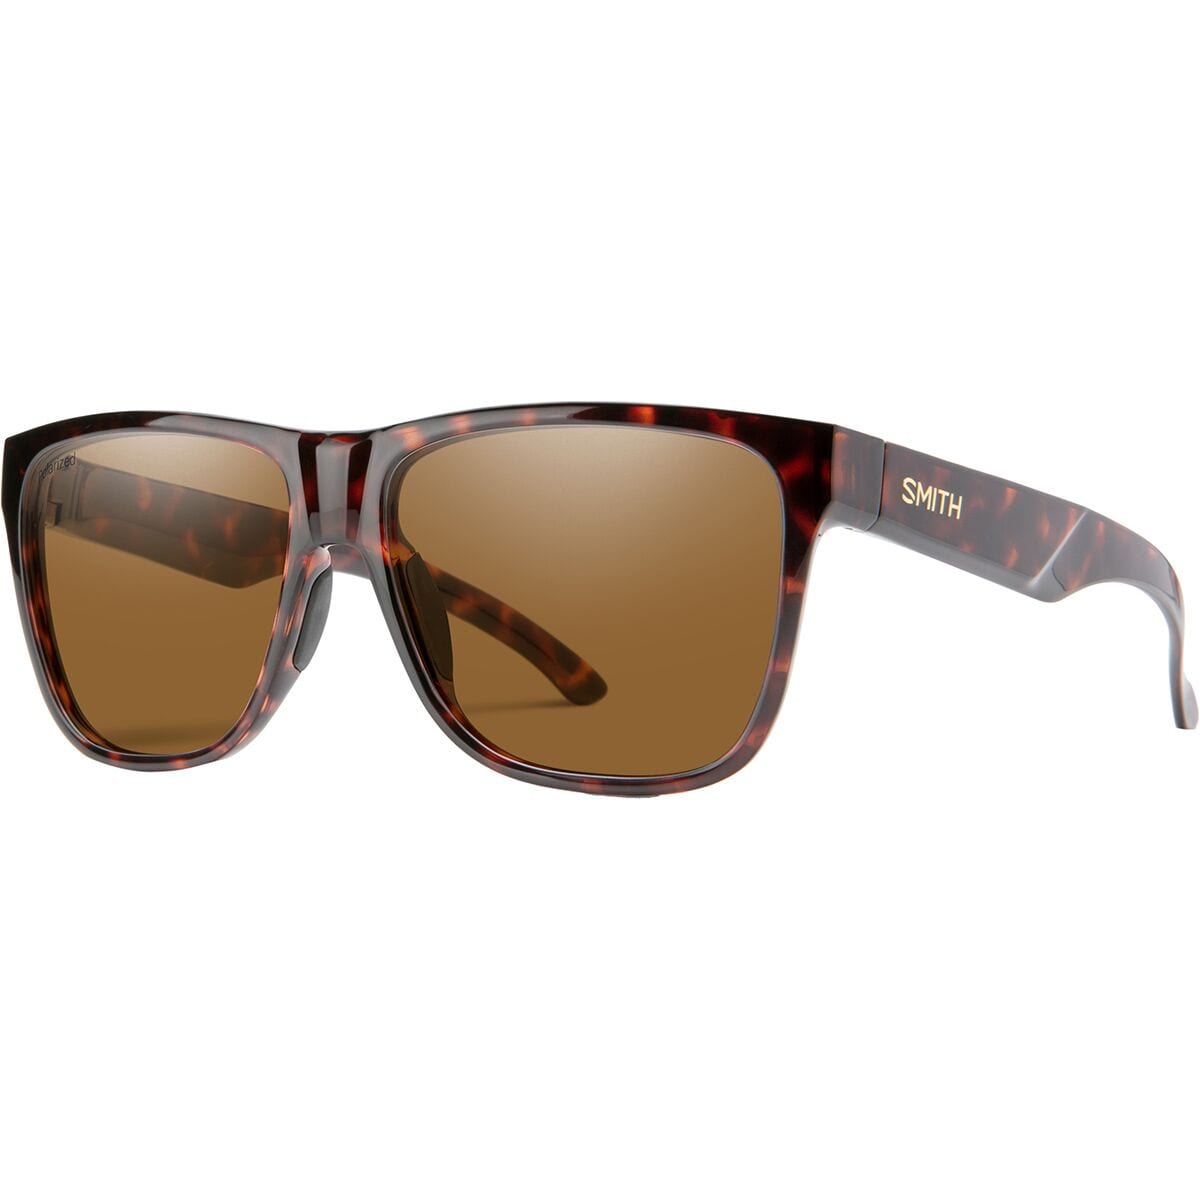 Поляризованные солнцезащитные очки lowdown xl 2 Smith, цвет tortoise/polarized brown